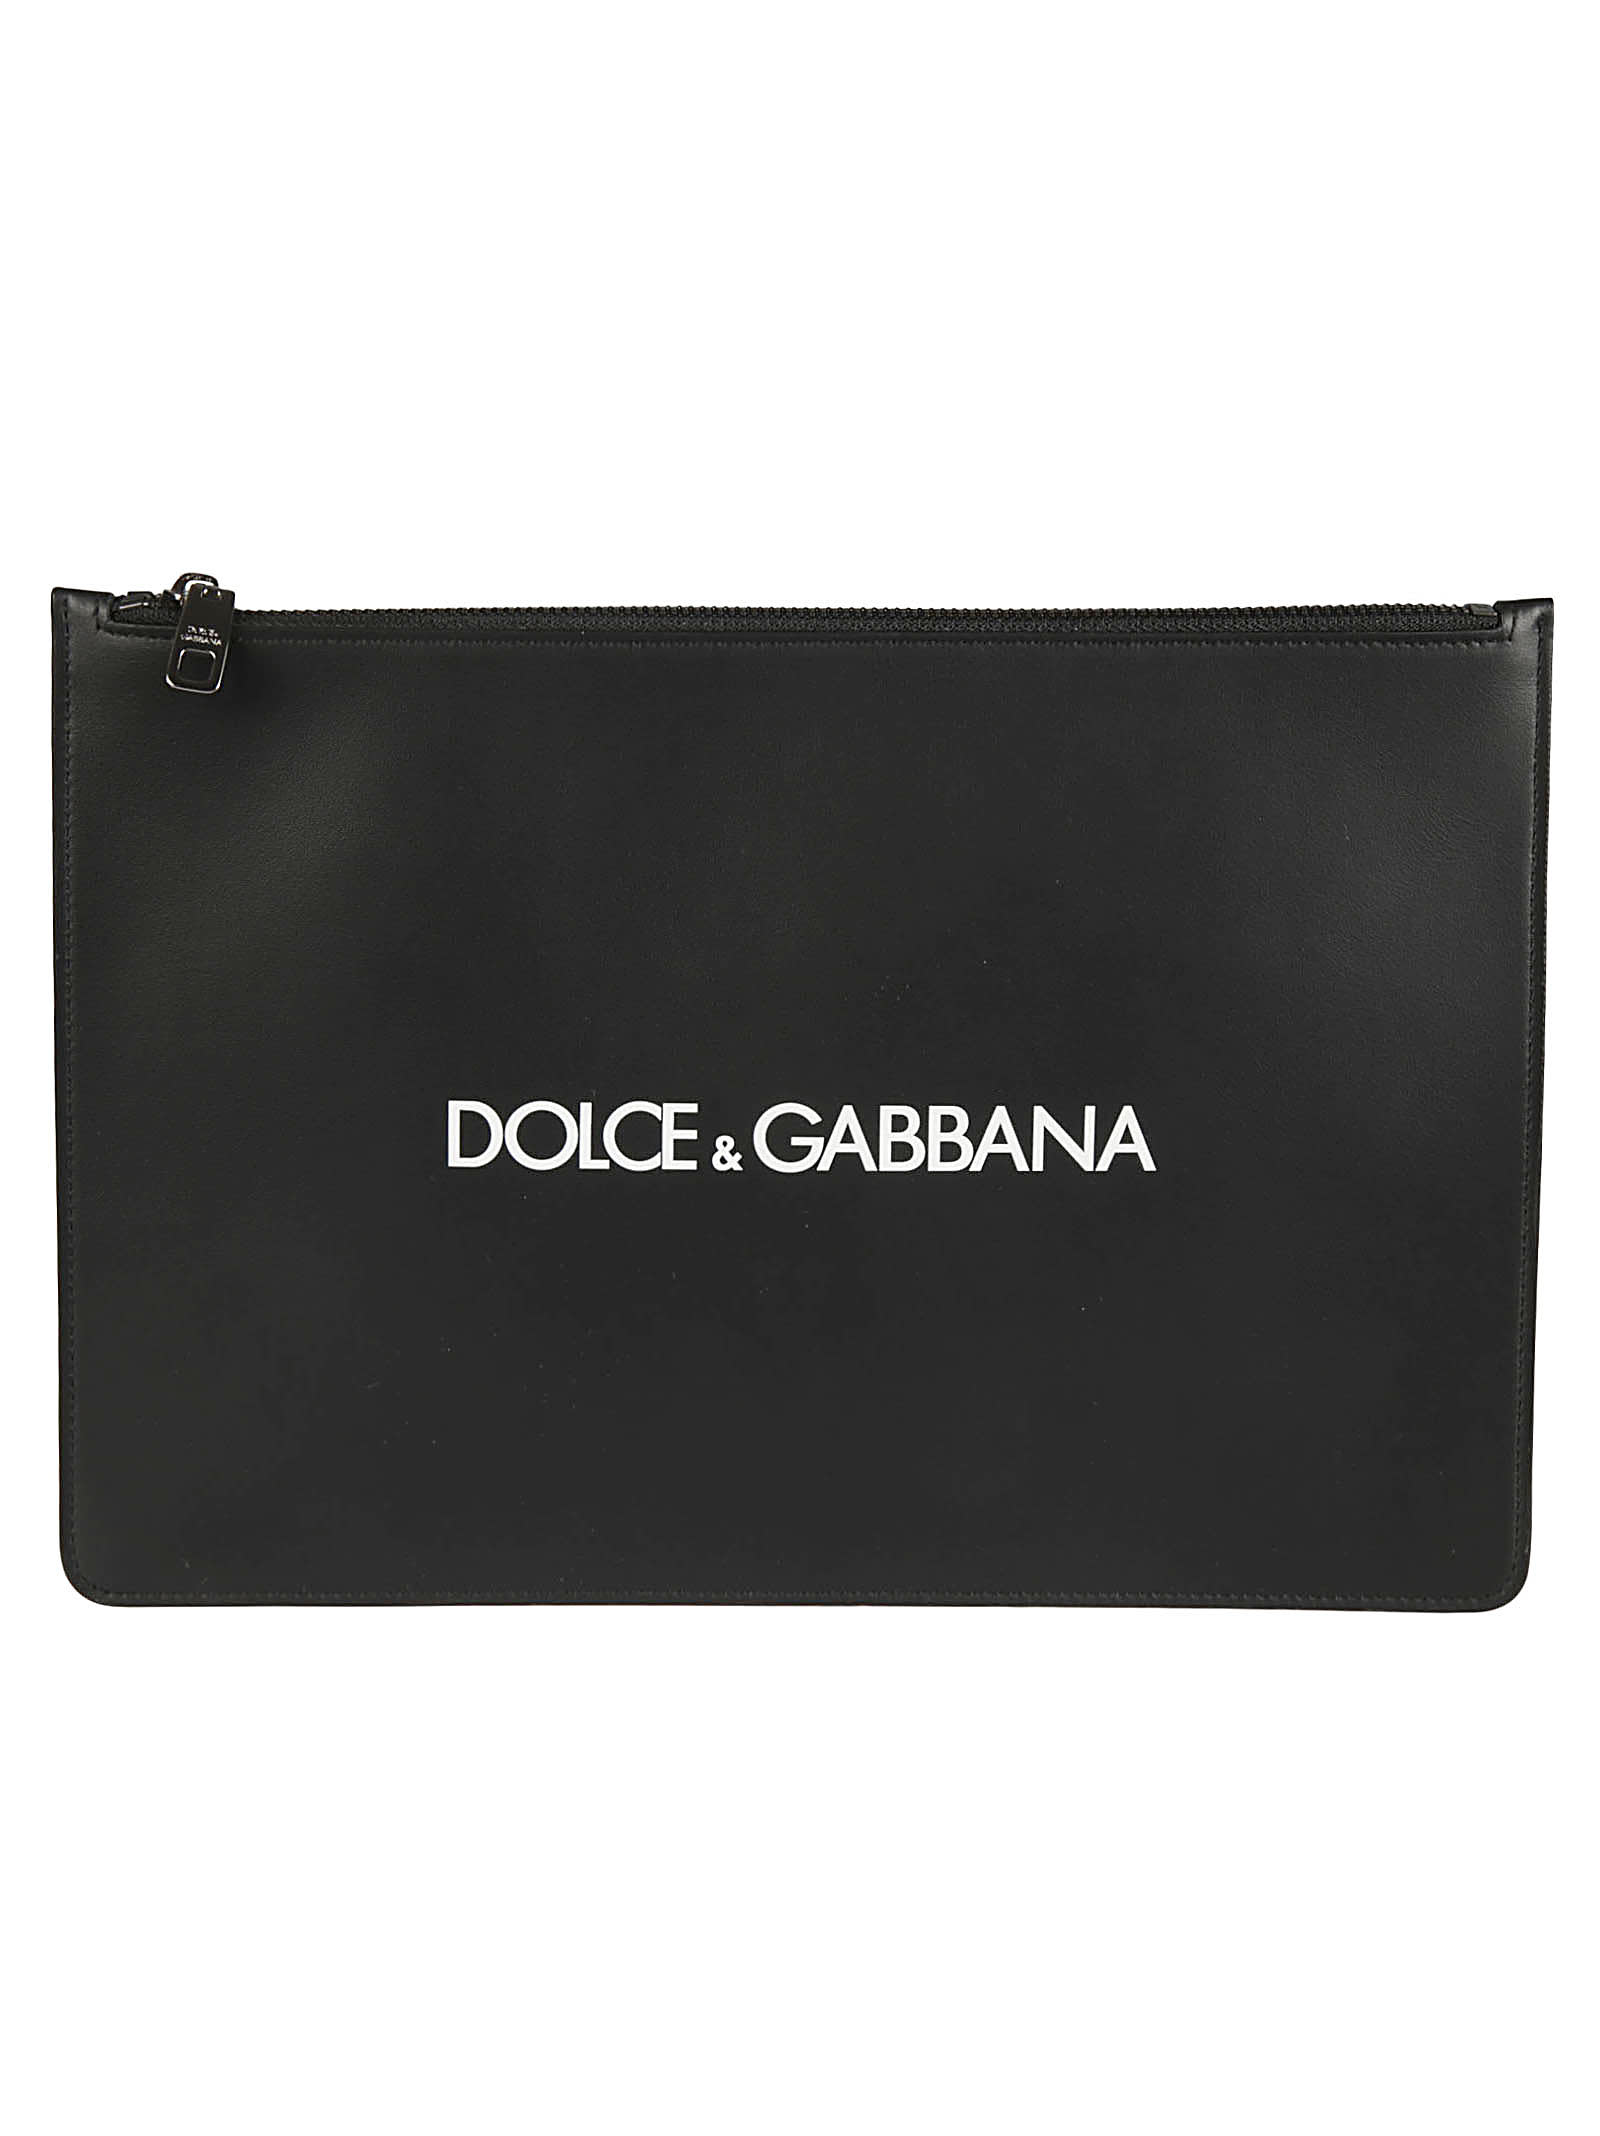 Dolce & Gabbana Logo Printed Clutch